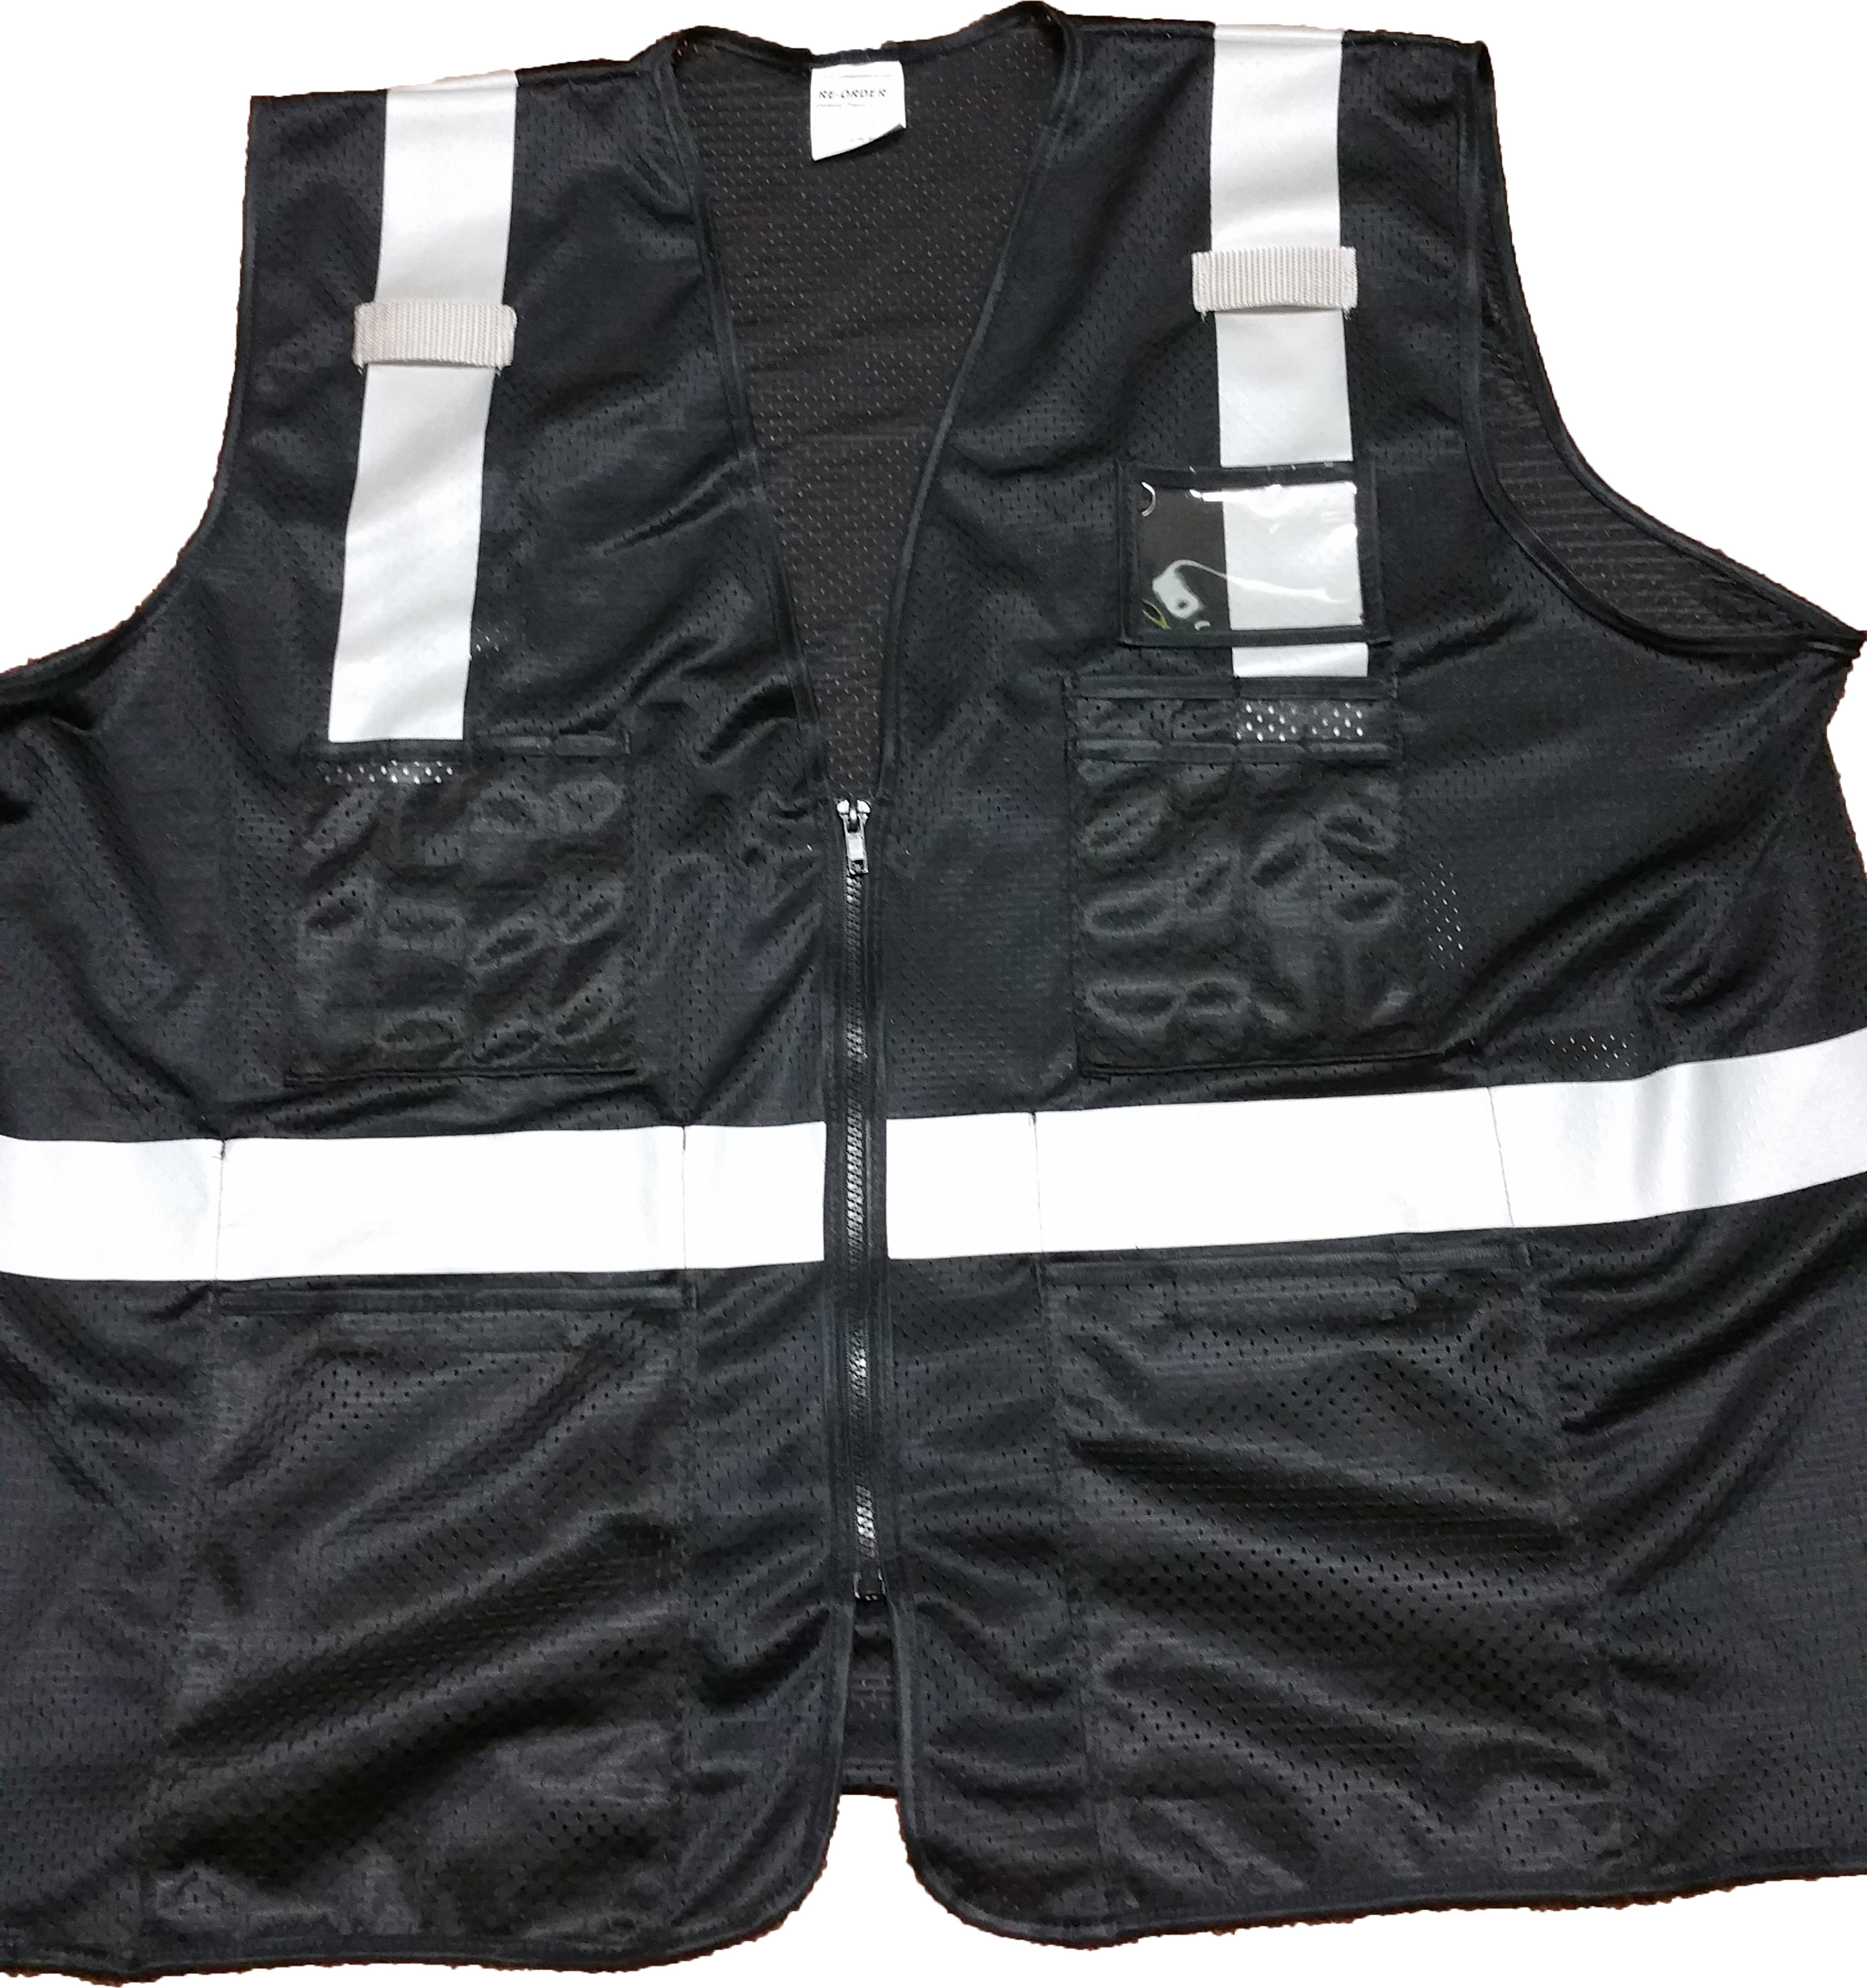 Safety Vests - 350-0102875 - Black Mesh Safety Vest with Silver Hi-Gloss Stripi